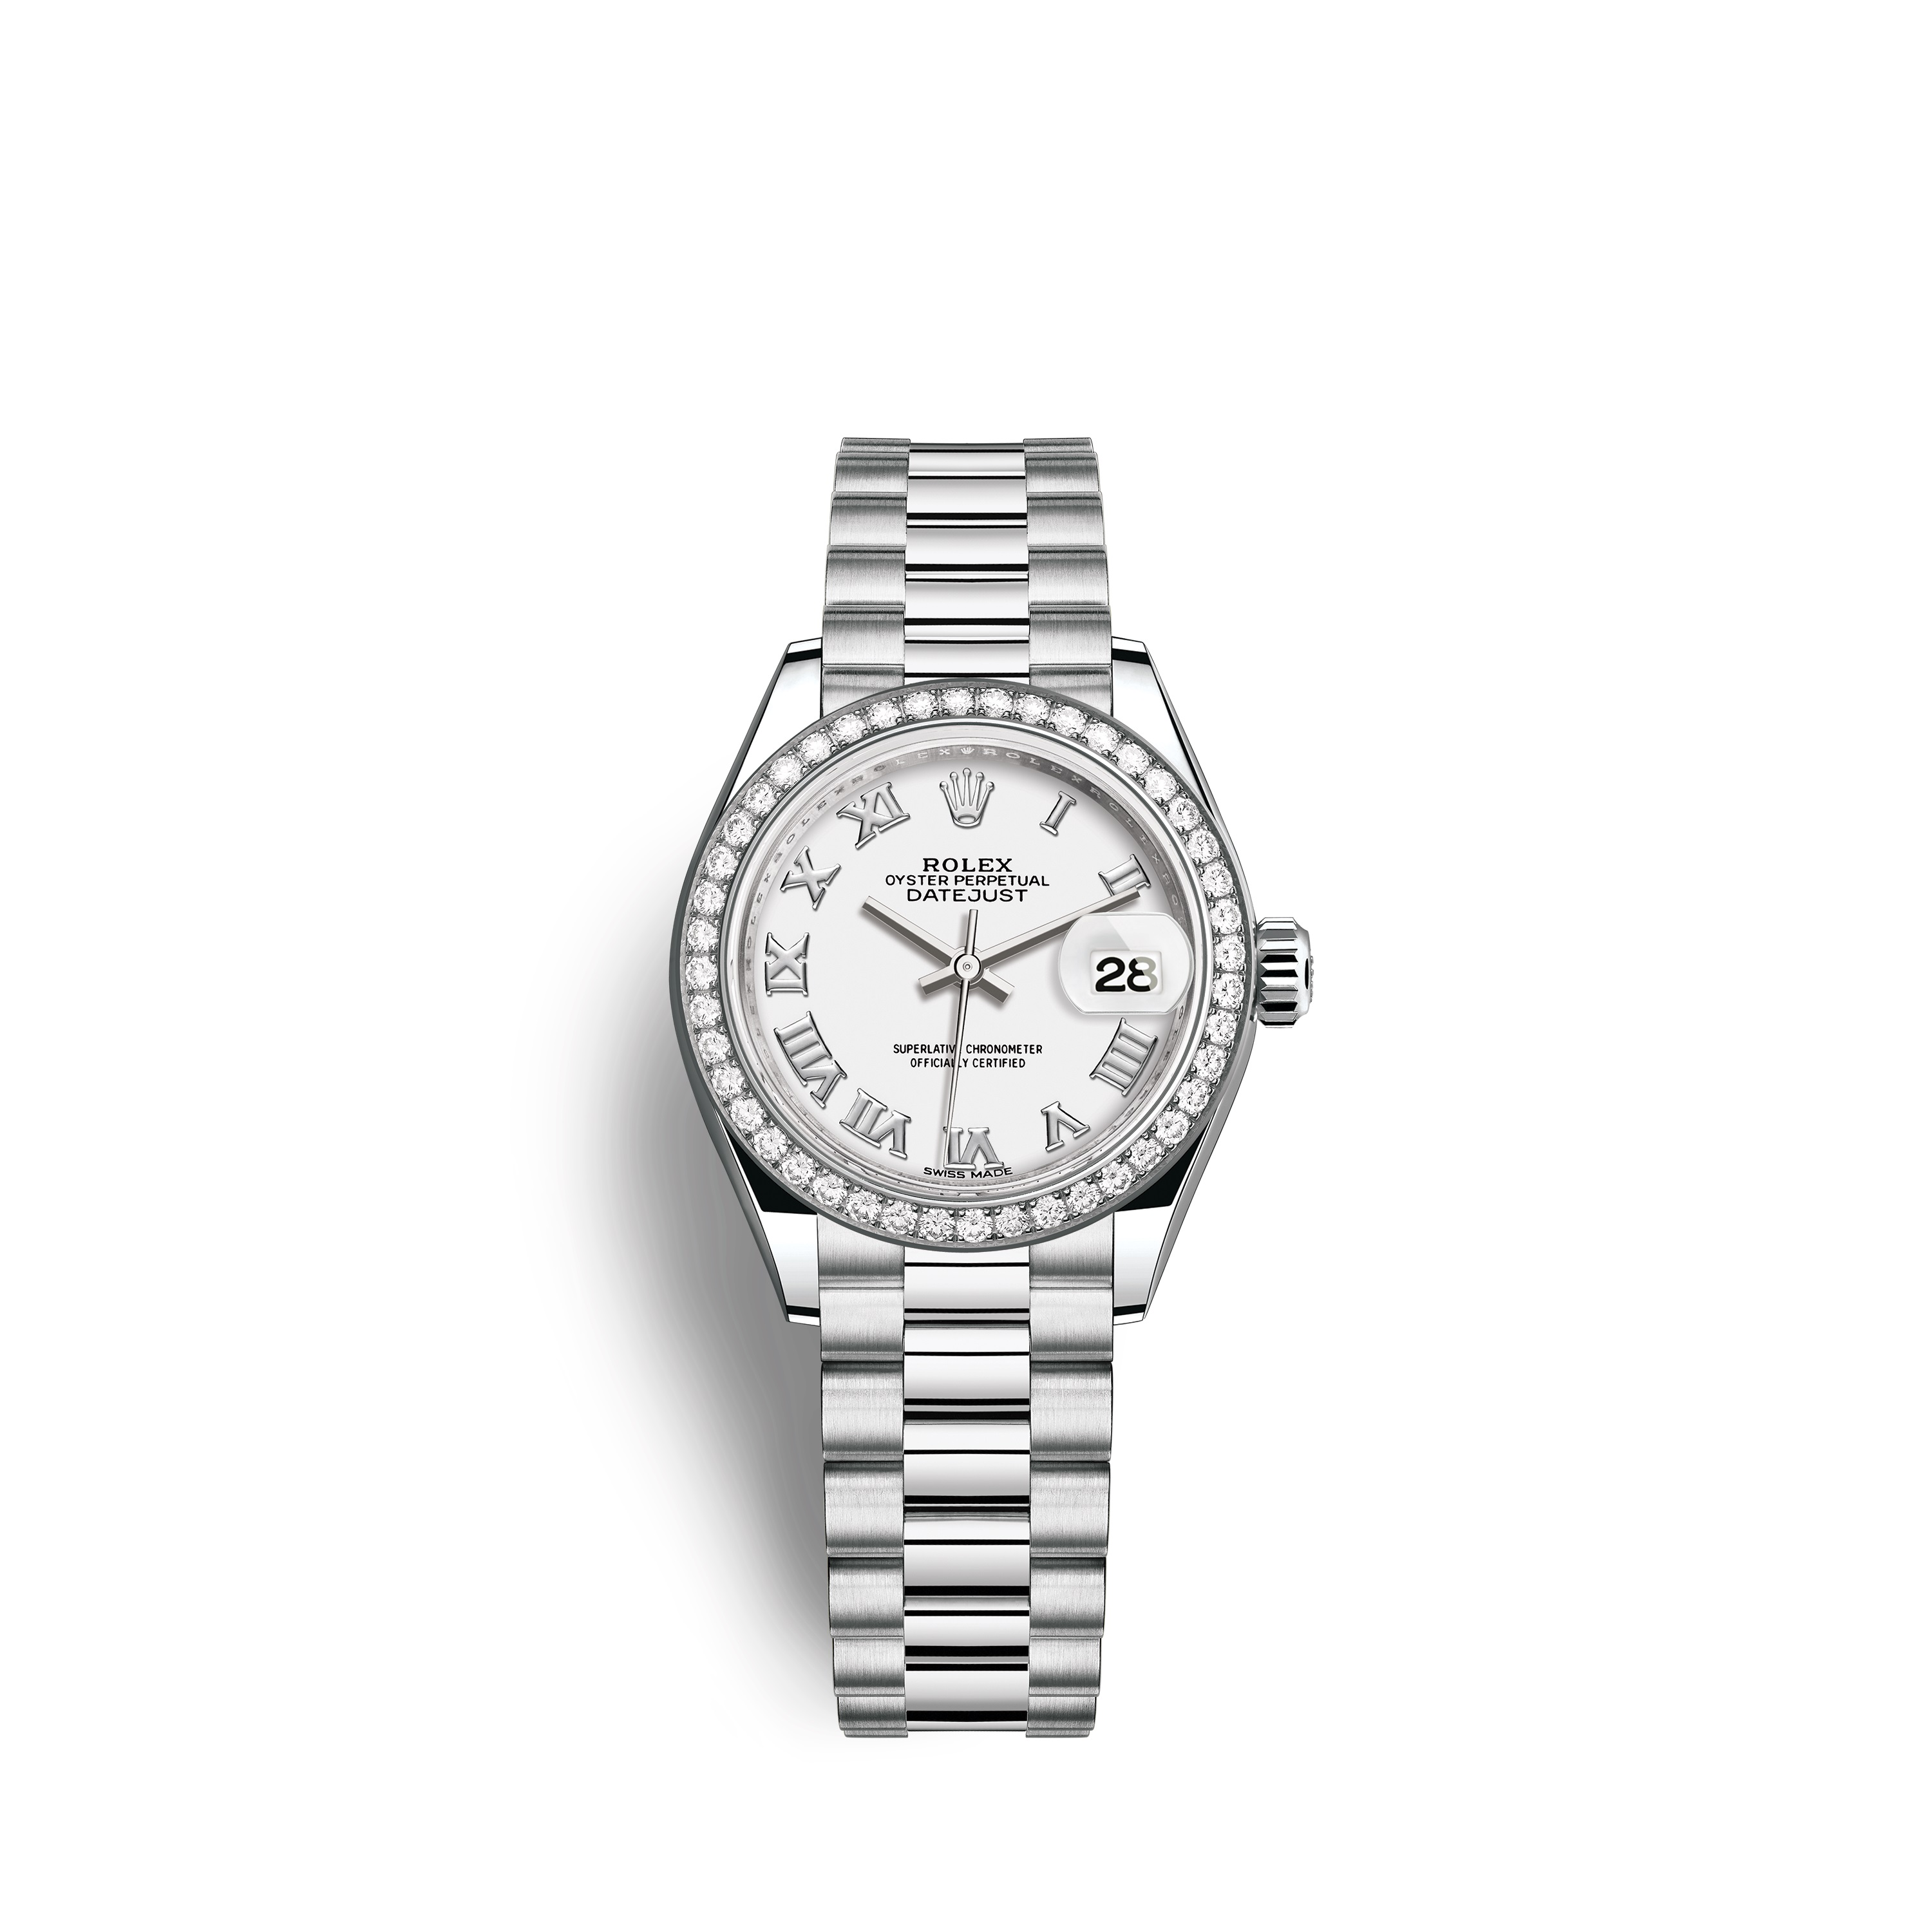 Lady-Datejust 28 279136RBR Platinum & Diamonds Watch (White)